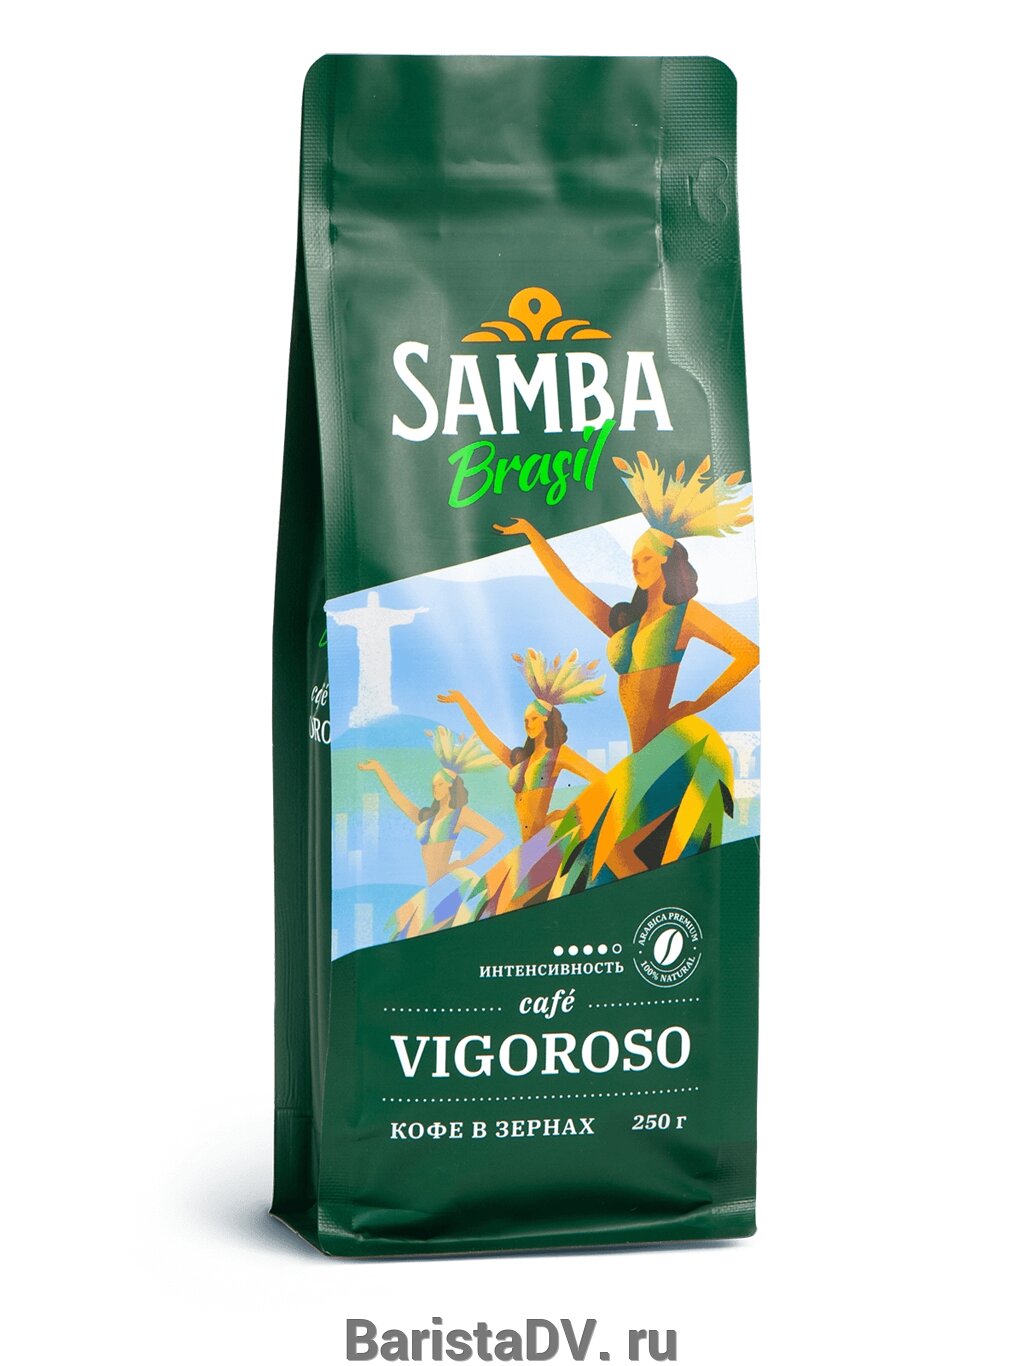 Кофе в зернах - Samba Vigoroso (Самба Вигоросо) 250 гр в/у от компании BaristaDV. ru - фото 1